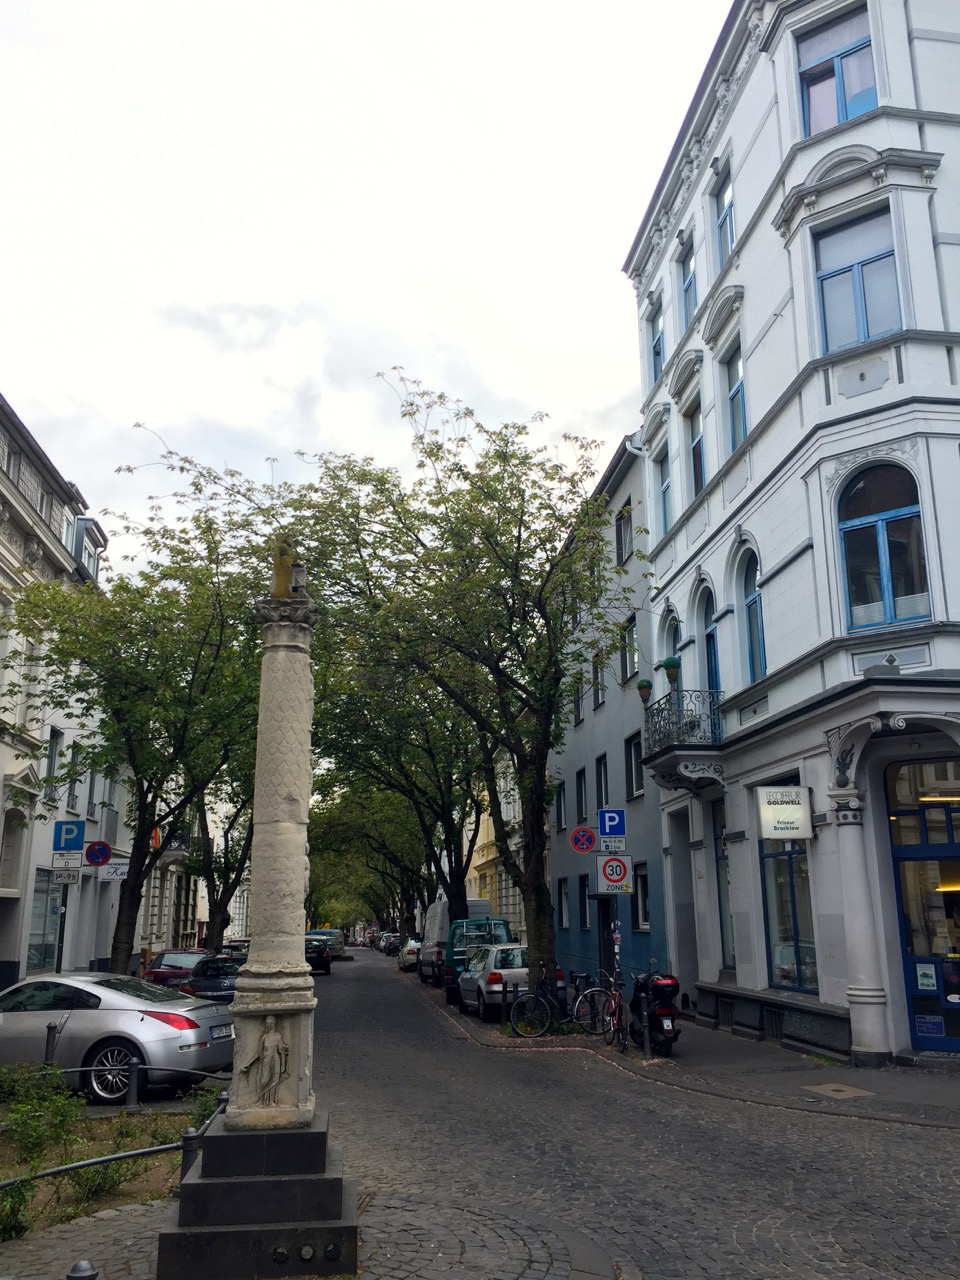 Jupitersaeule Altstadt Bonn